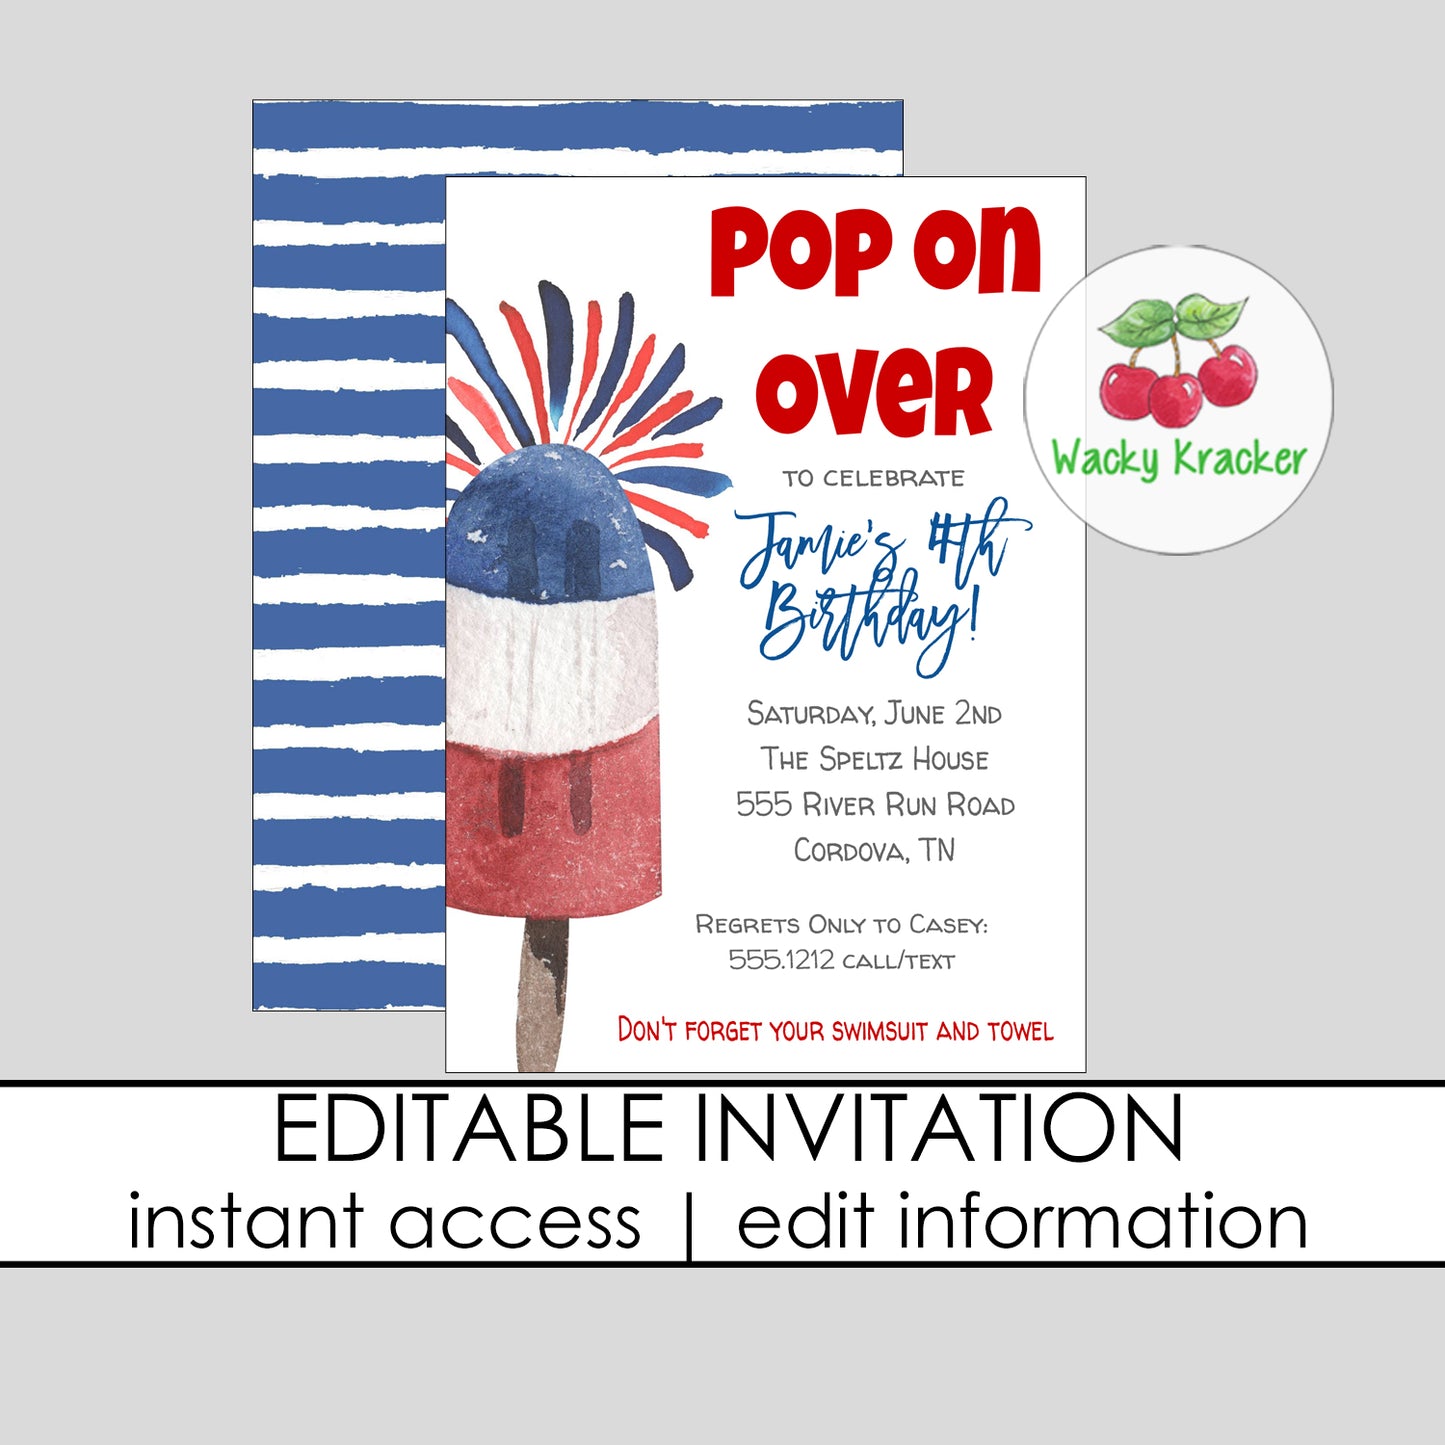 Pop on Over Invitation